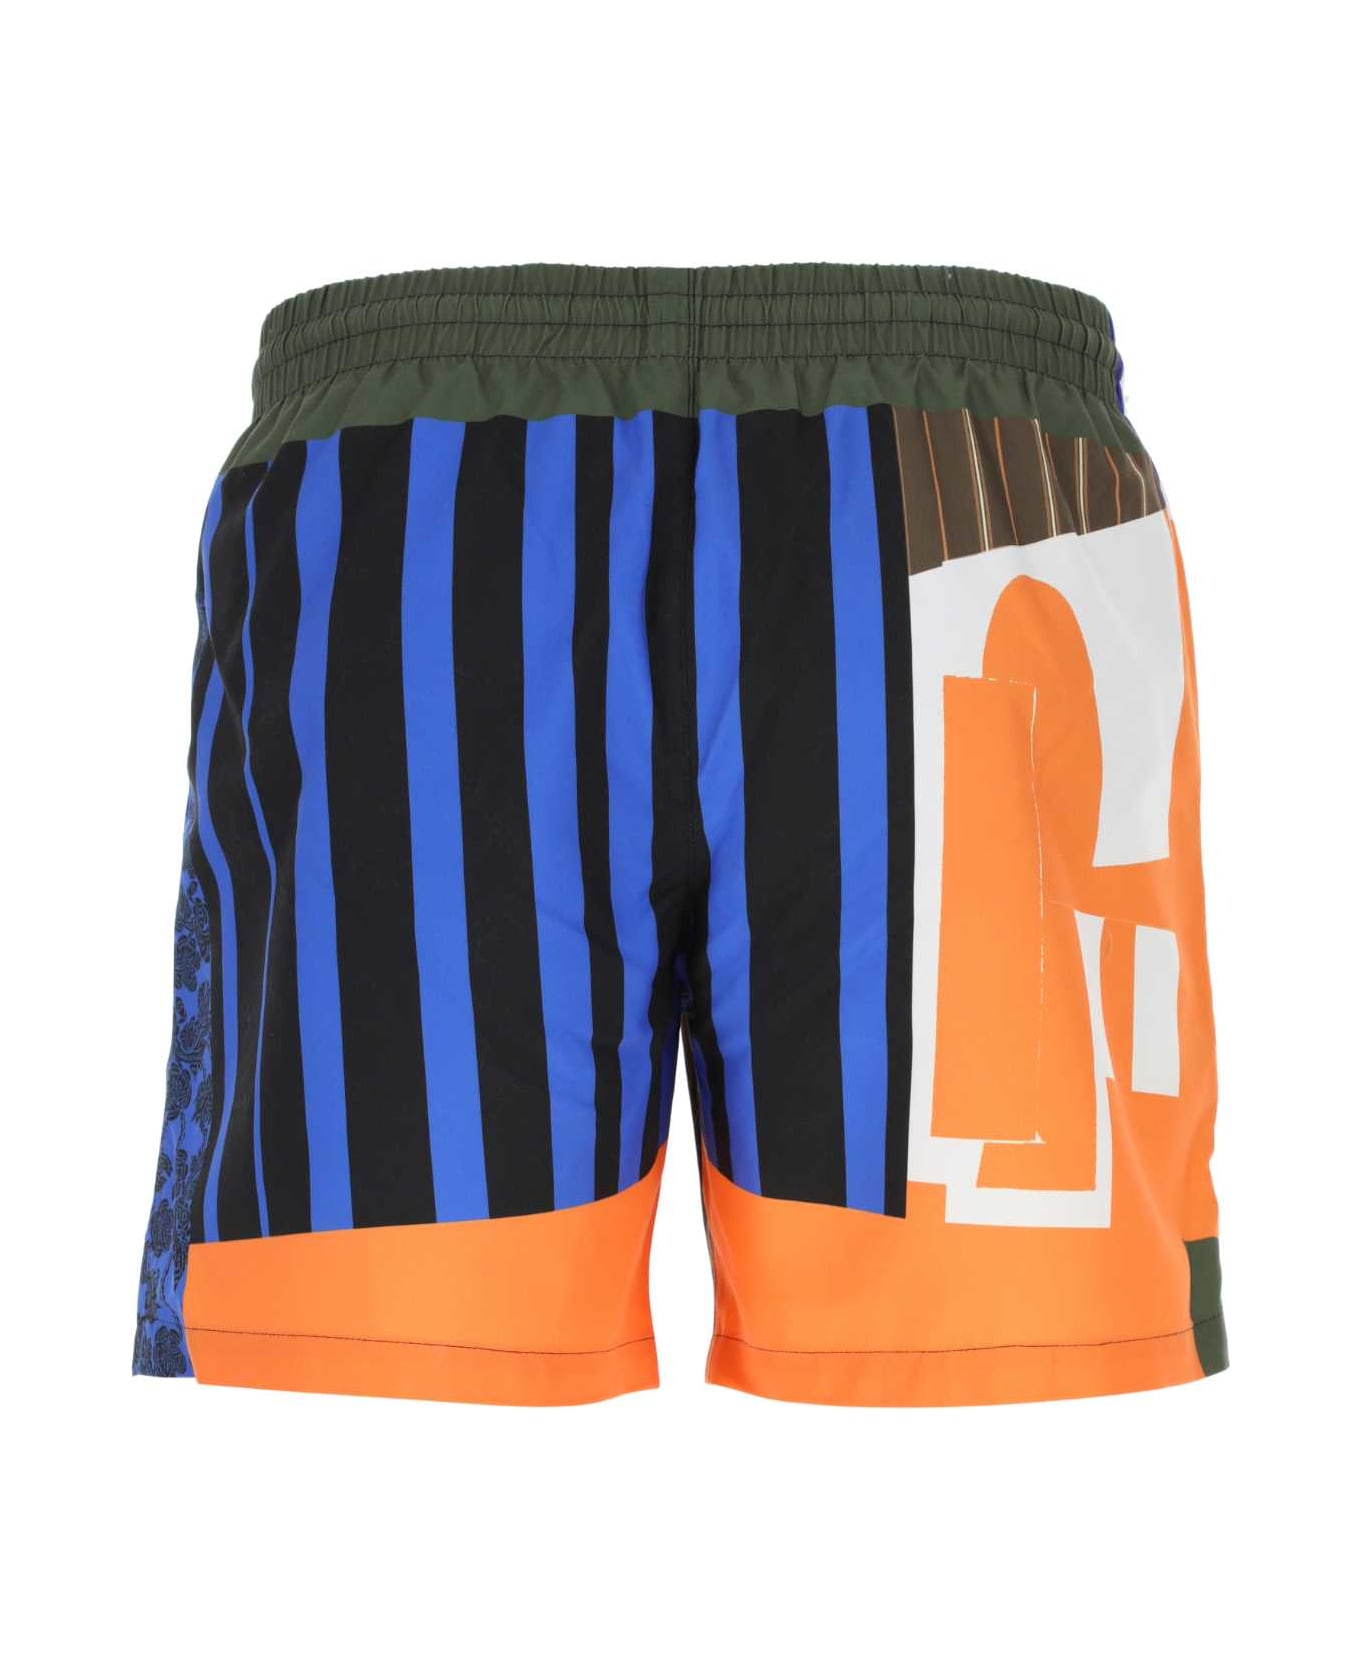 Dries Van Noten Printed Nylon Bermuda Shorts - DESSIN D